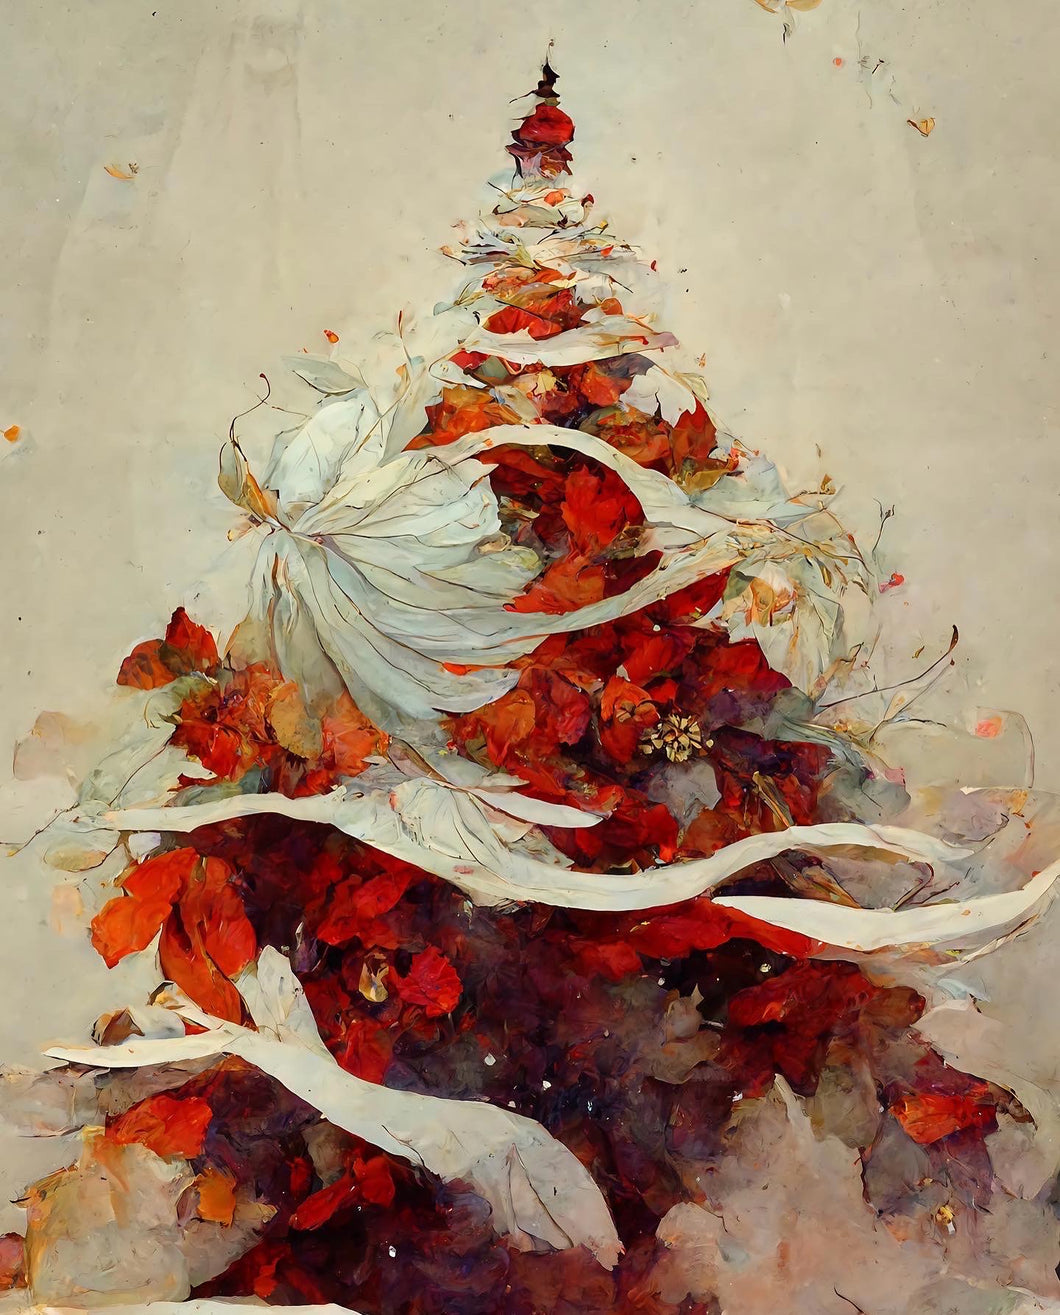 *PREORDER* Poinsettia Christmas Tree (variant 1) by CJ